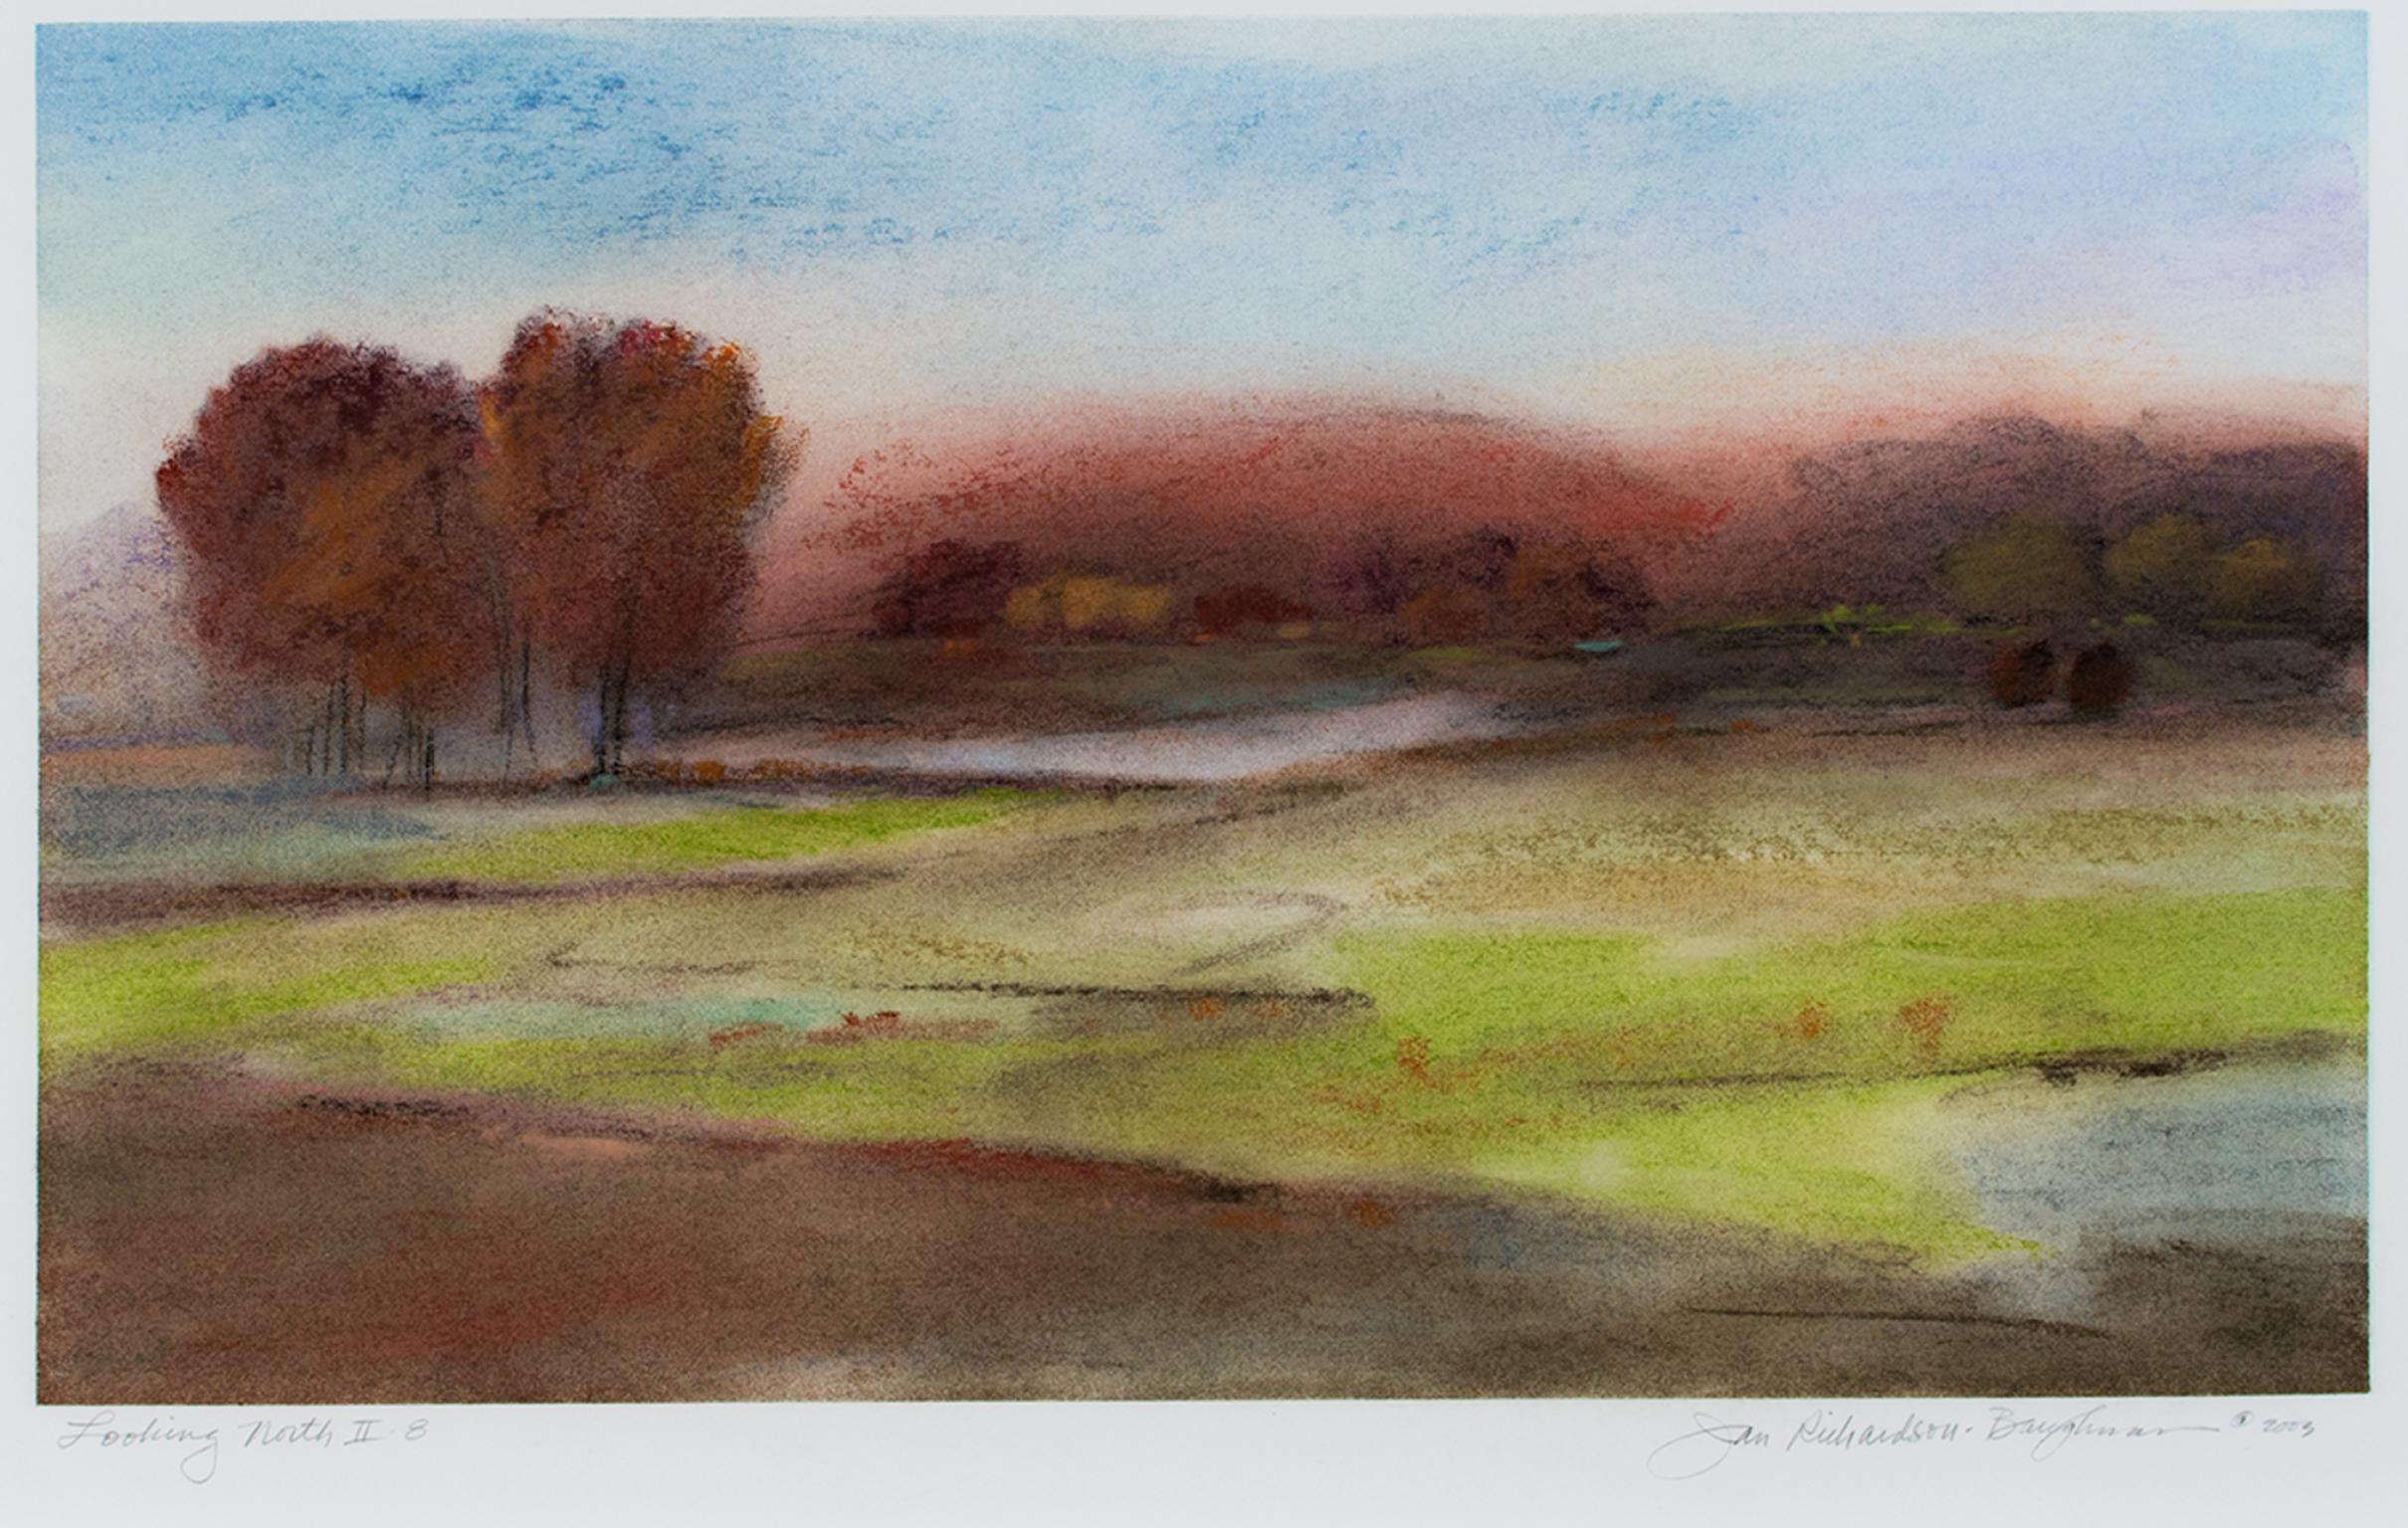 Janet Richardson-Baughman Landscape Art - "Looking North II-8, " Pastel Autumn Landscape signed by Jan Richardson-Baughman